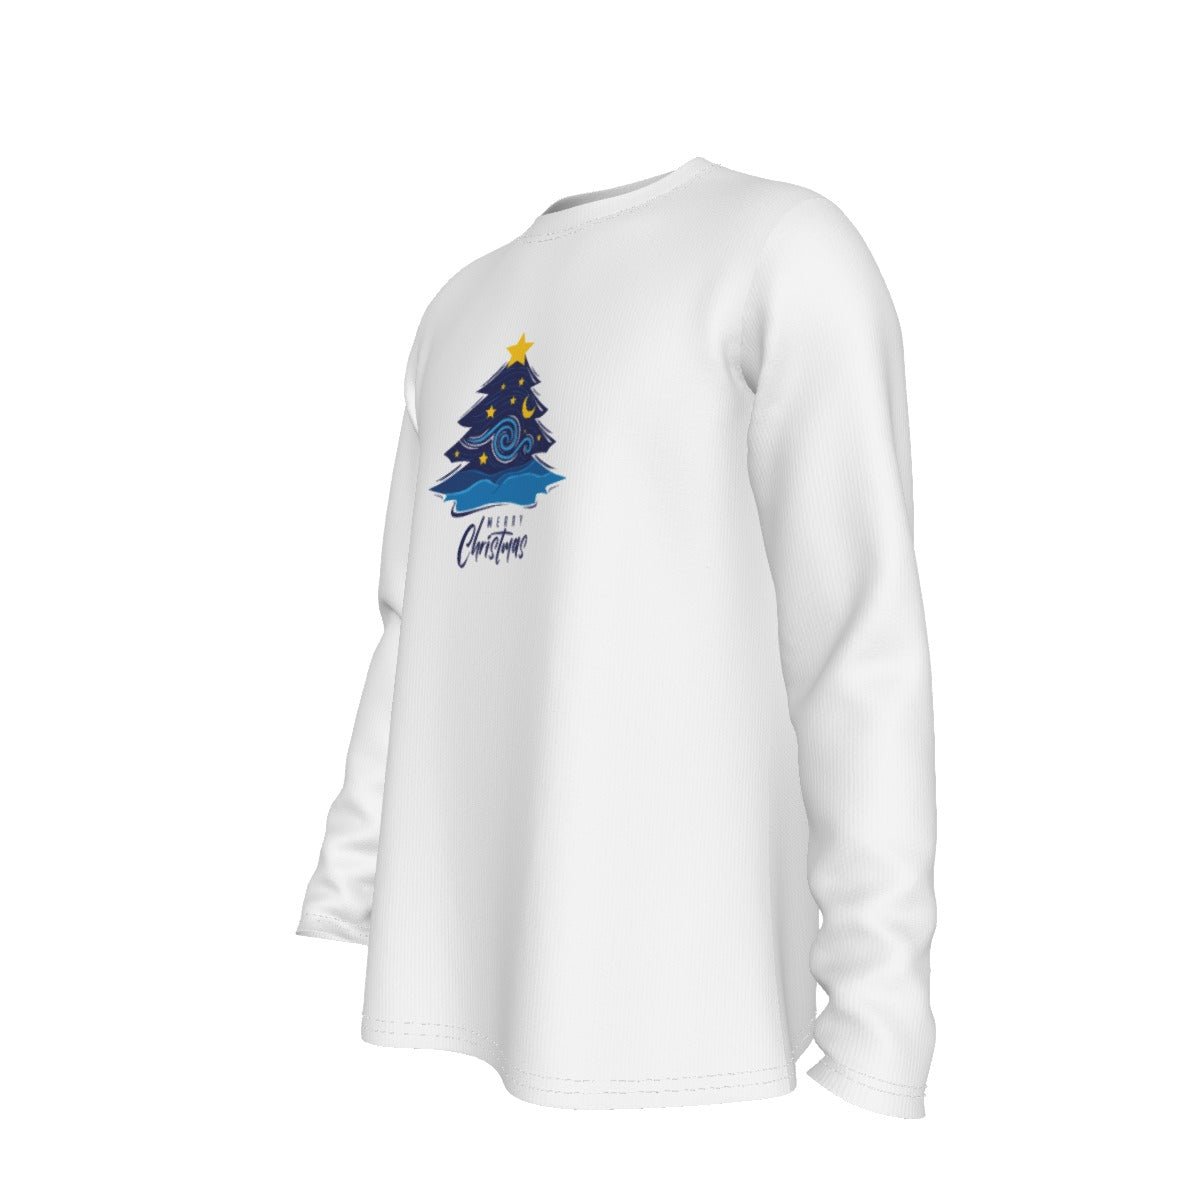 Men's Long Sleeve Christmas T-Shirt - Merry Christmas - Blue Tree - Festive Style